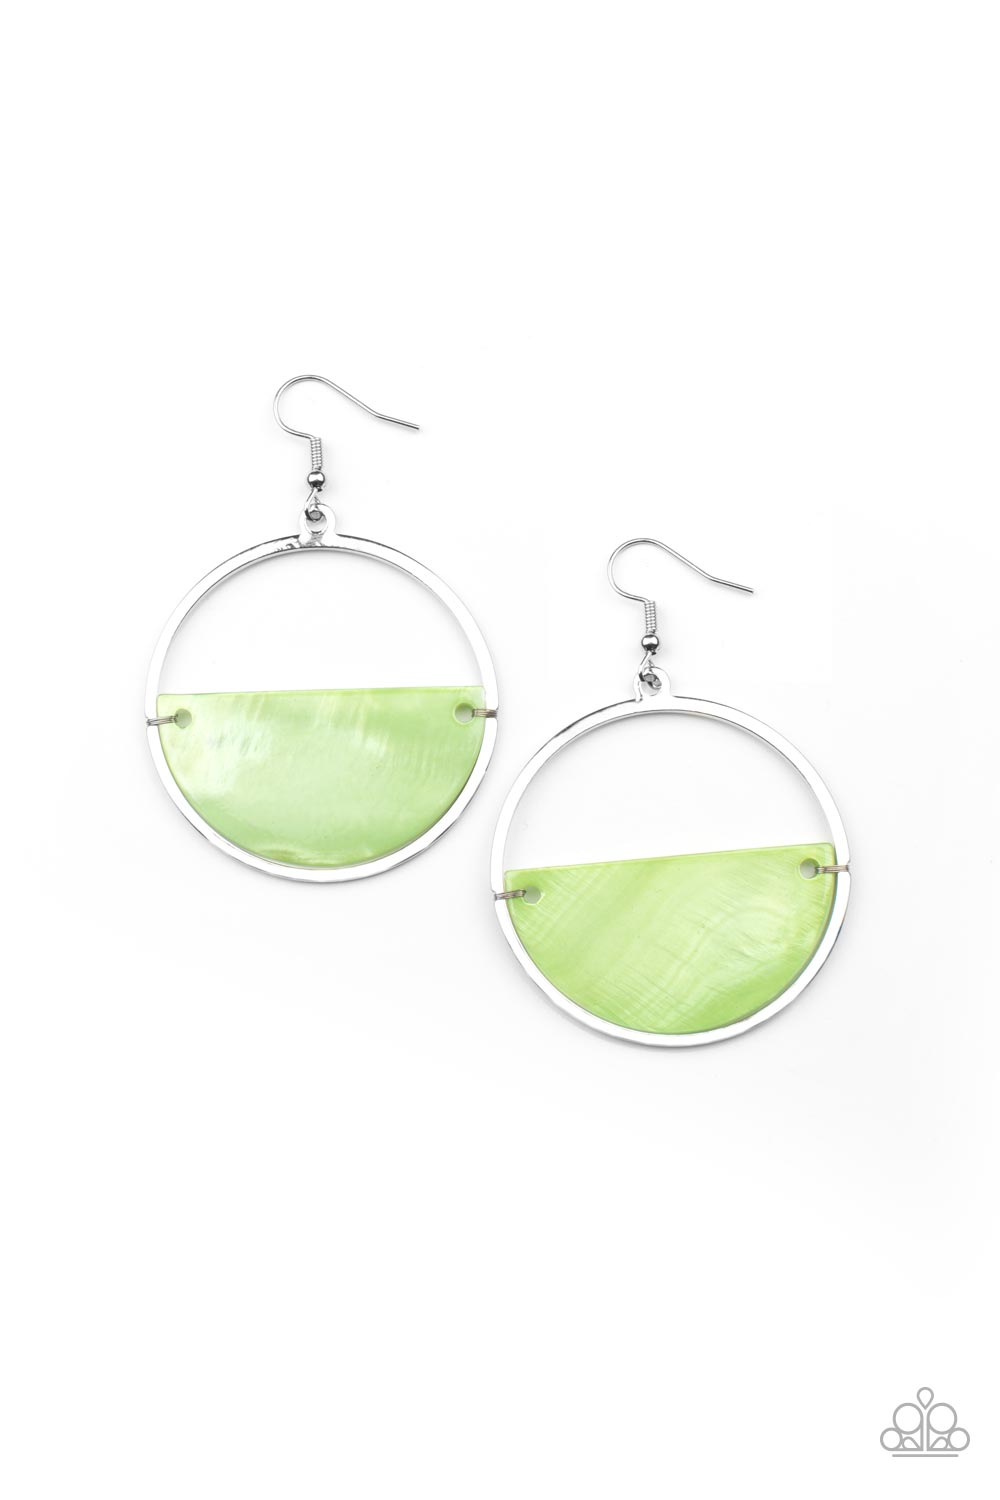 Seashore Vibes - Green Earrings - Paparazzi Accessories